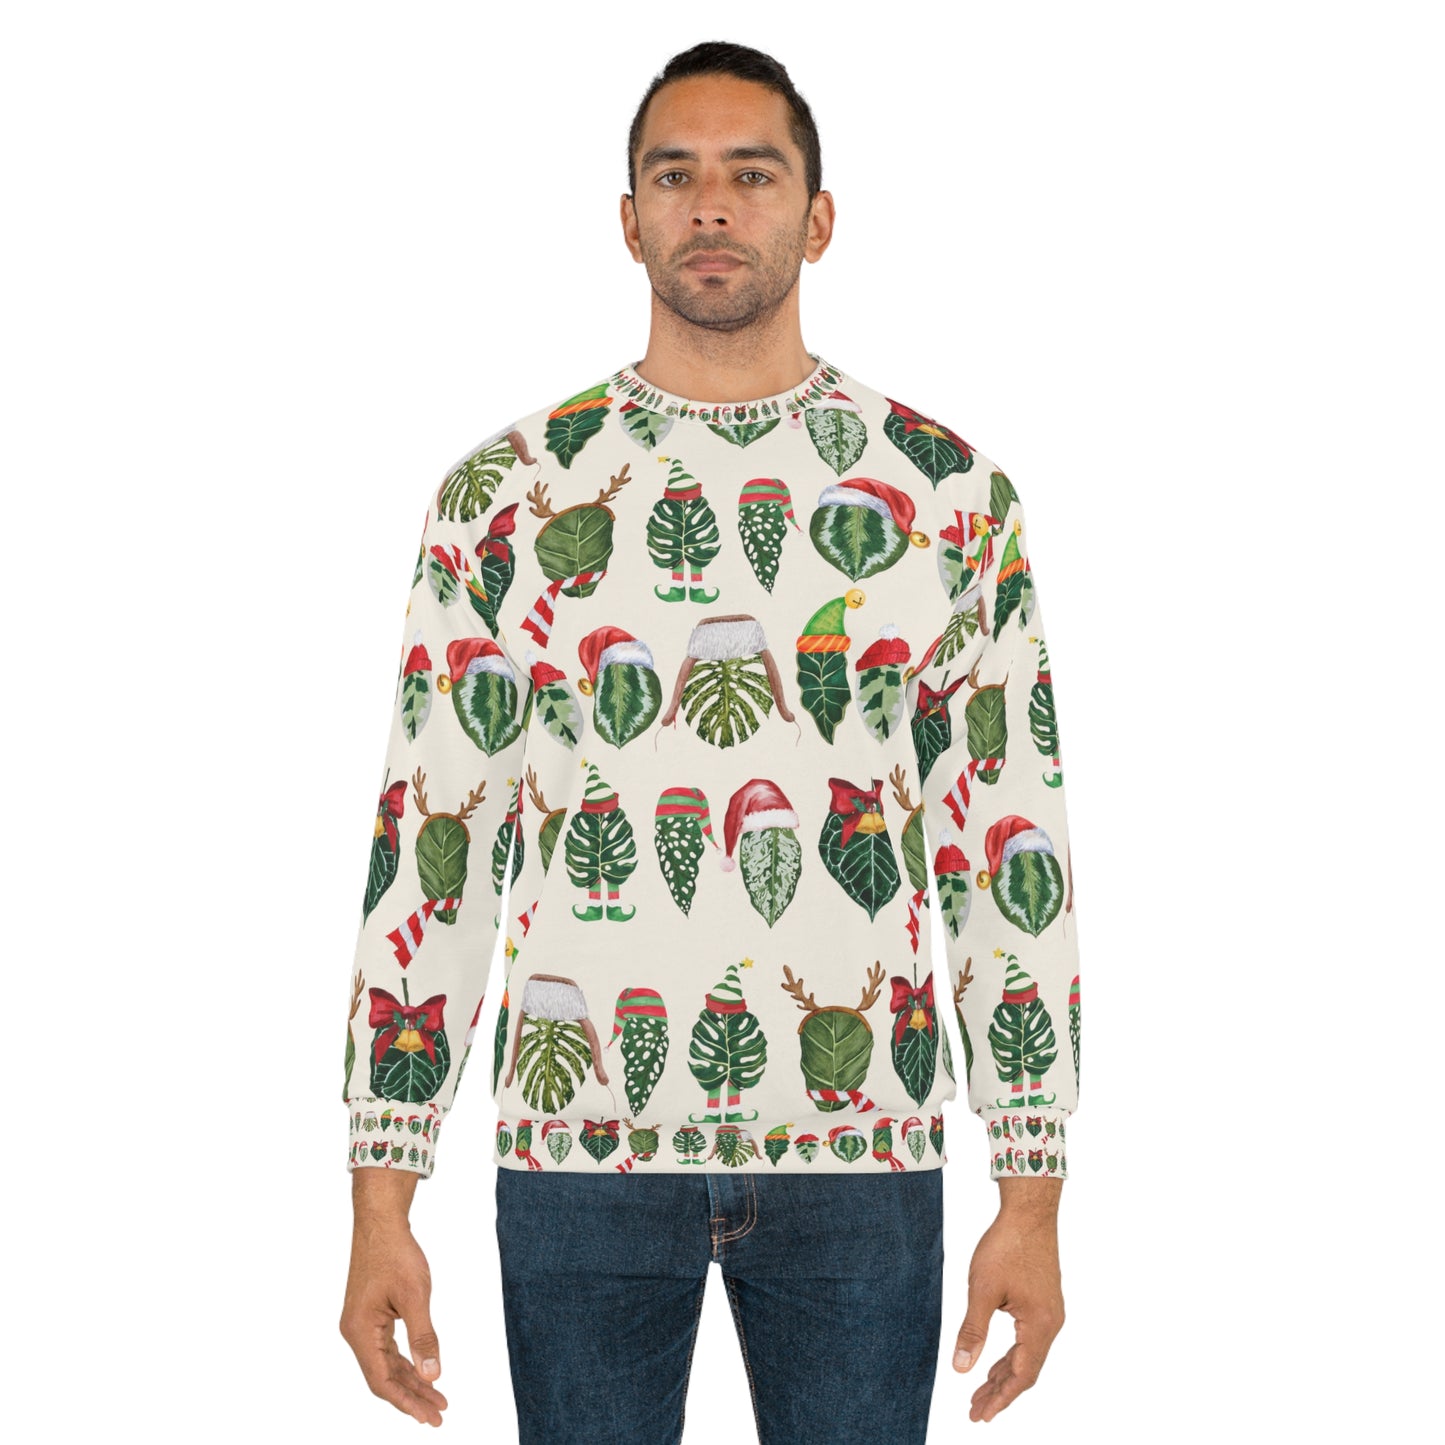 Christmas plant Unisex Sweatshirt for plant daddy, plant mama or plant lady